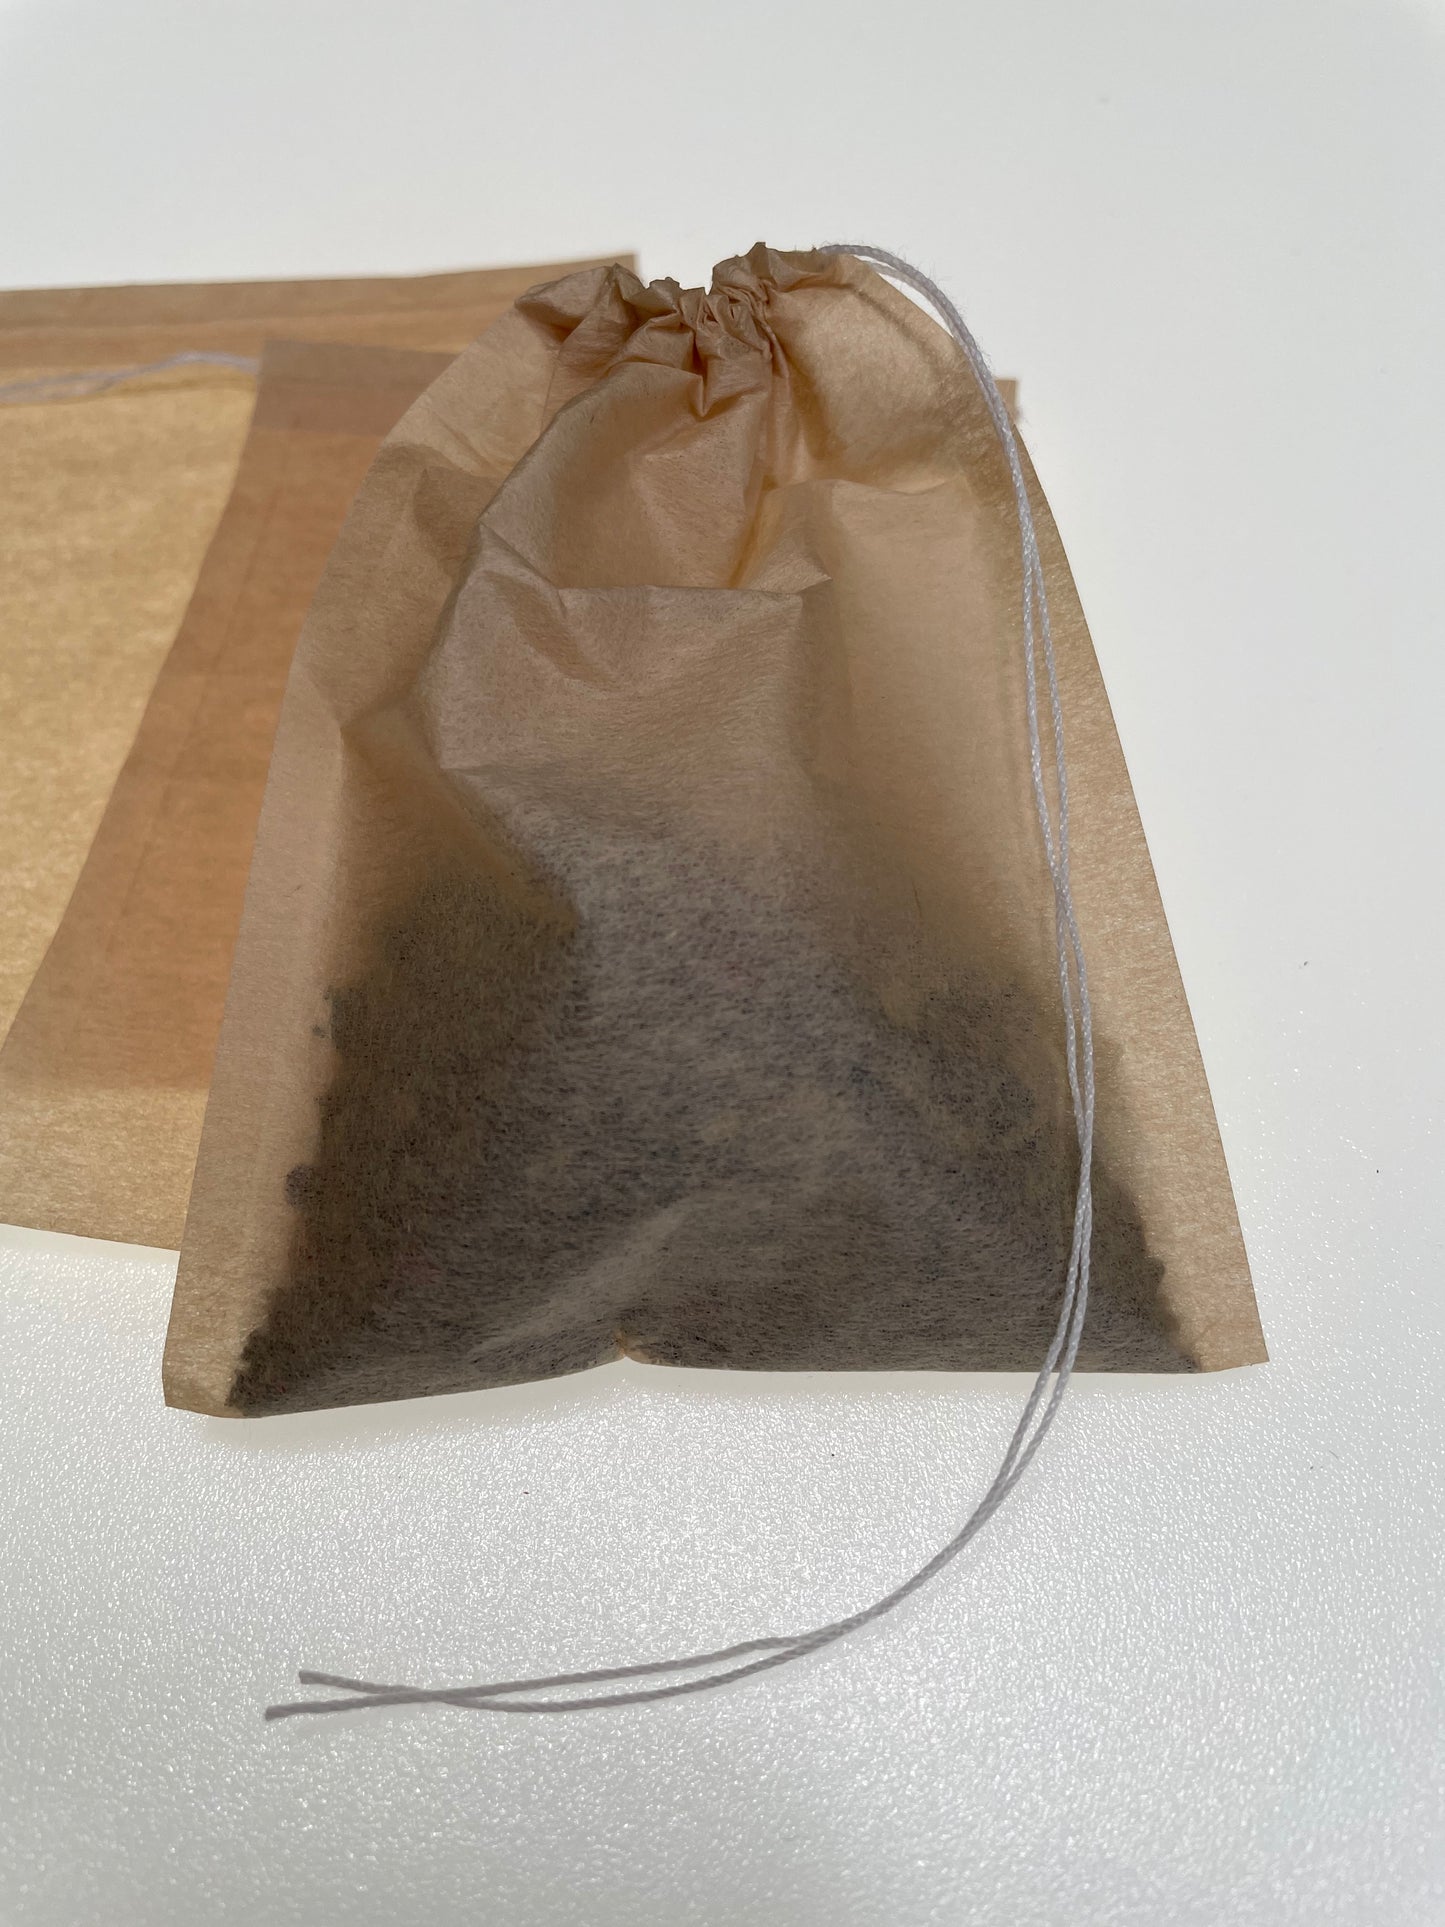 Tea Bags for Loose Leaf Tea, 6 pack, Filtered, Disposable, Drawstring